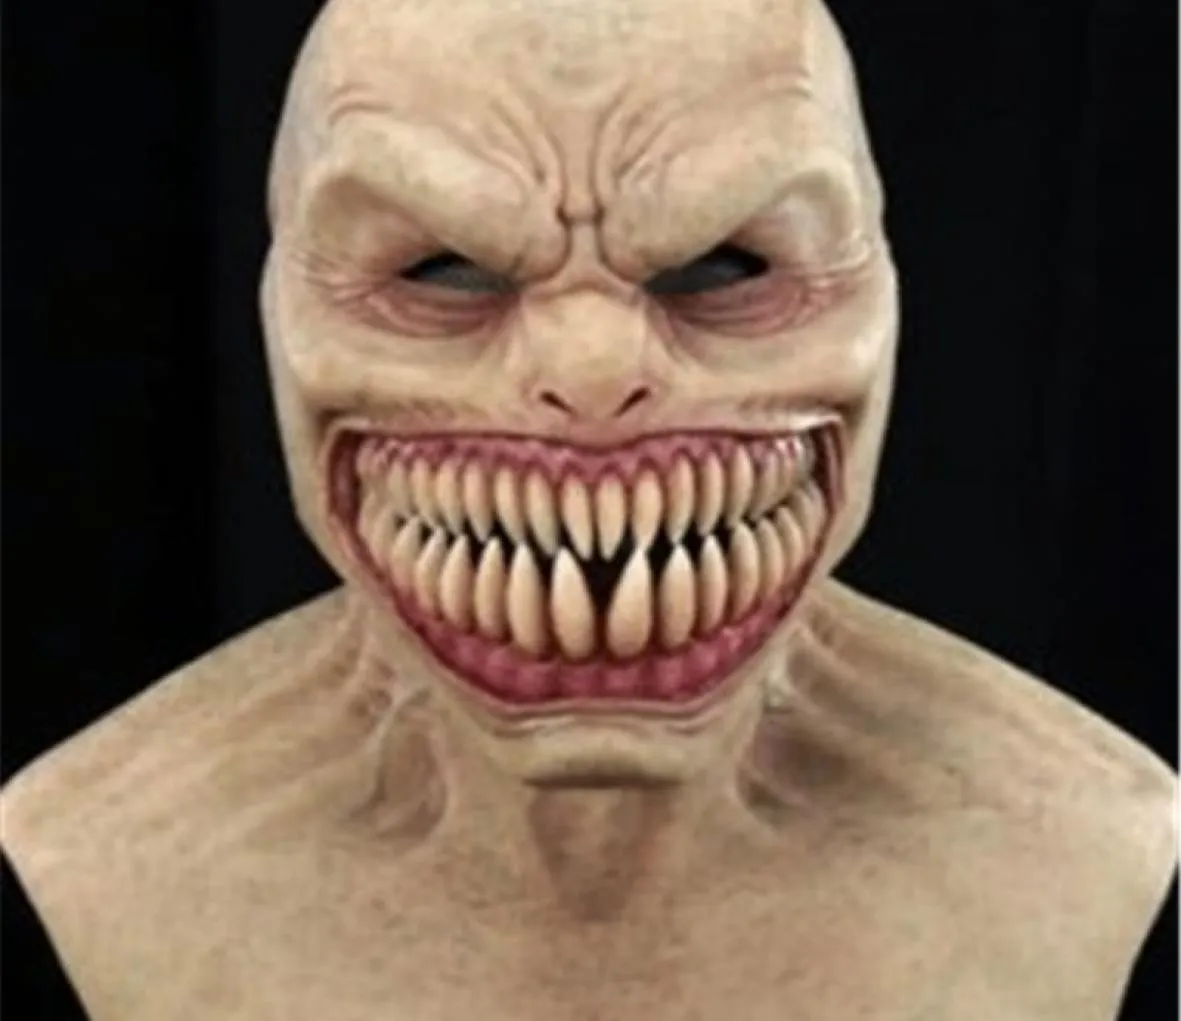 Nieuwe horror stalker masker Cosplay Creepy Monster Big mondtanden Chompers latex maskers Halloween Party Scary Costume Props Q08063427381